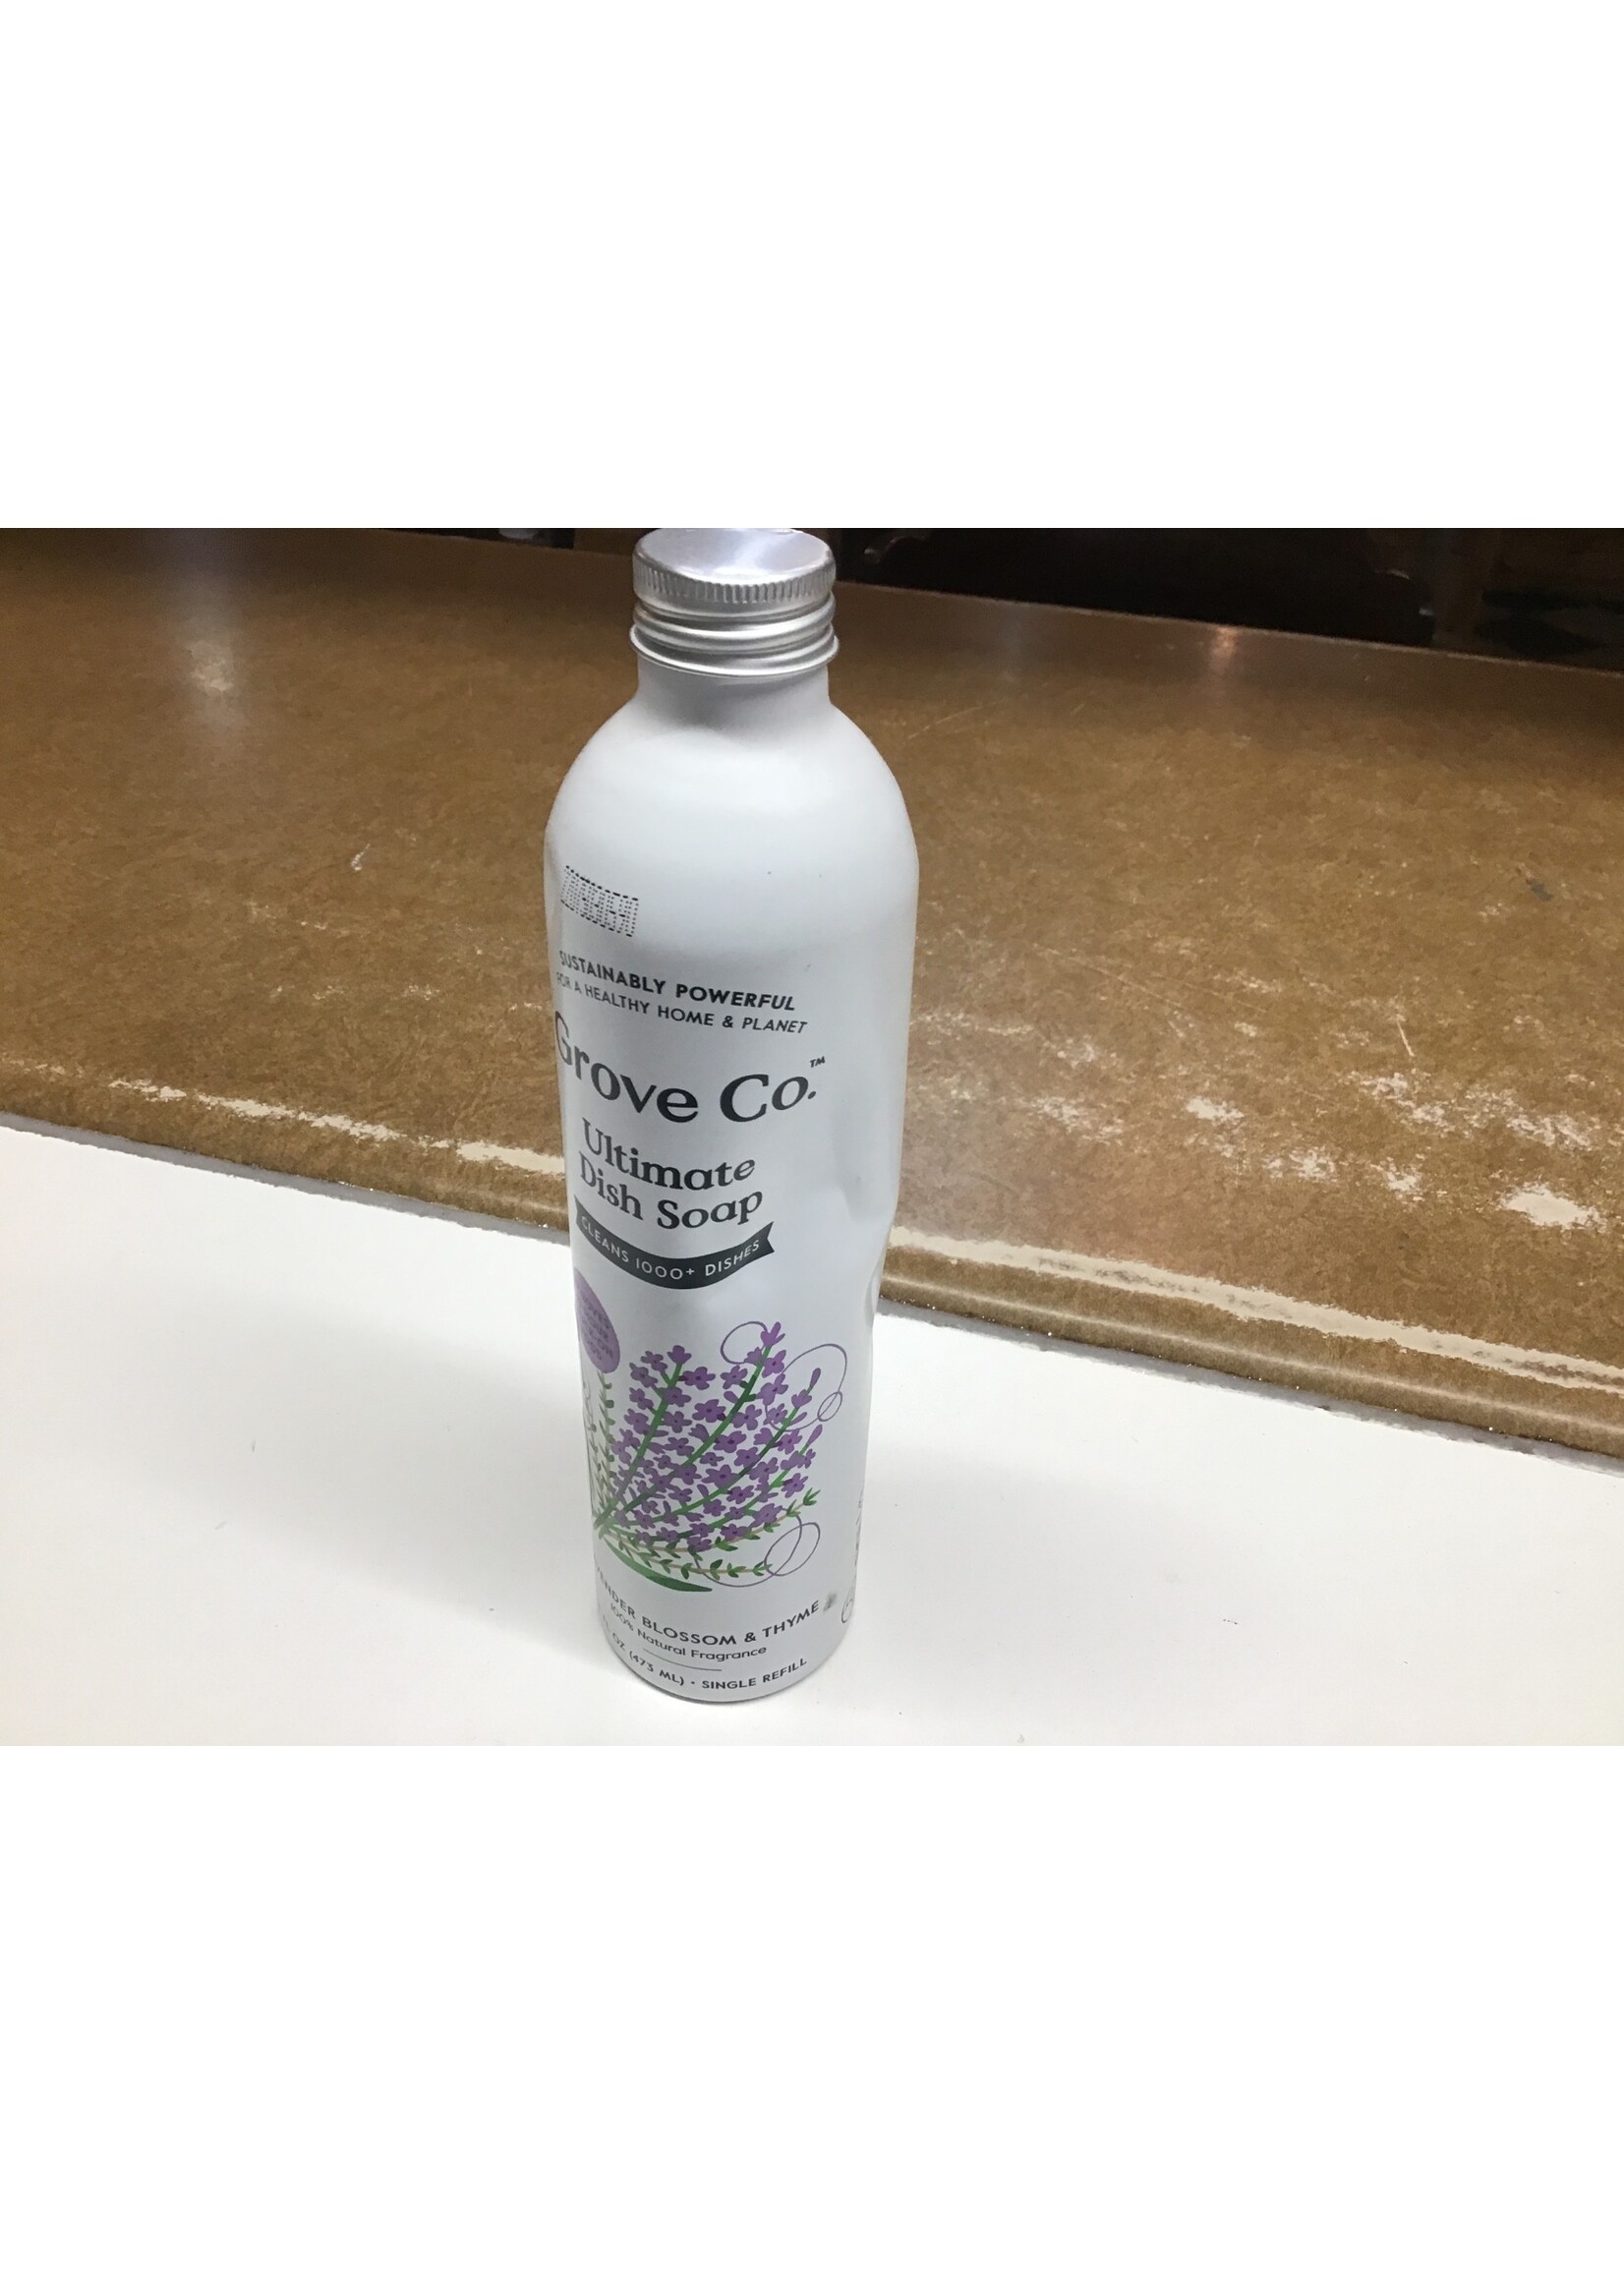 Bottle dented Grove Co. Lavender & Thyme Ultimate Dish Soap Refill in Aluminum Bottle - 16 fl oz